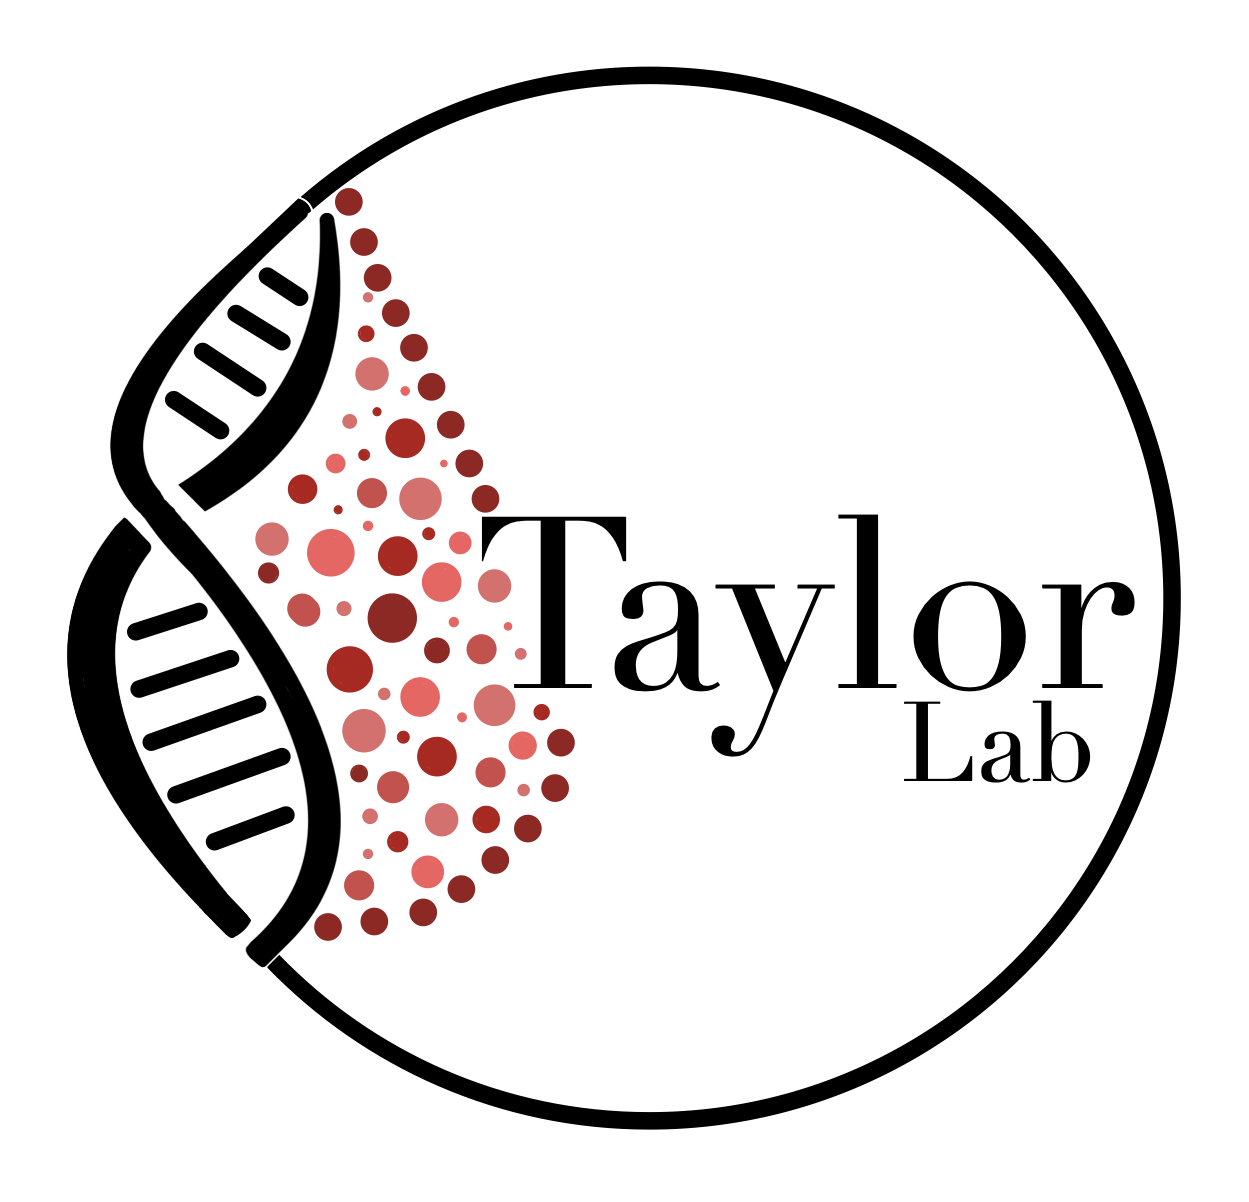 Taylor Lab